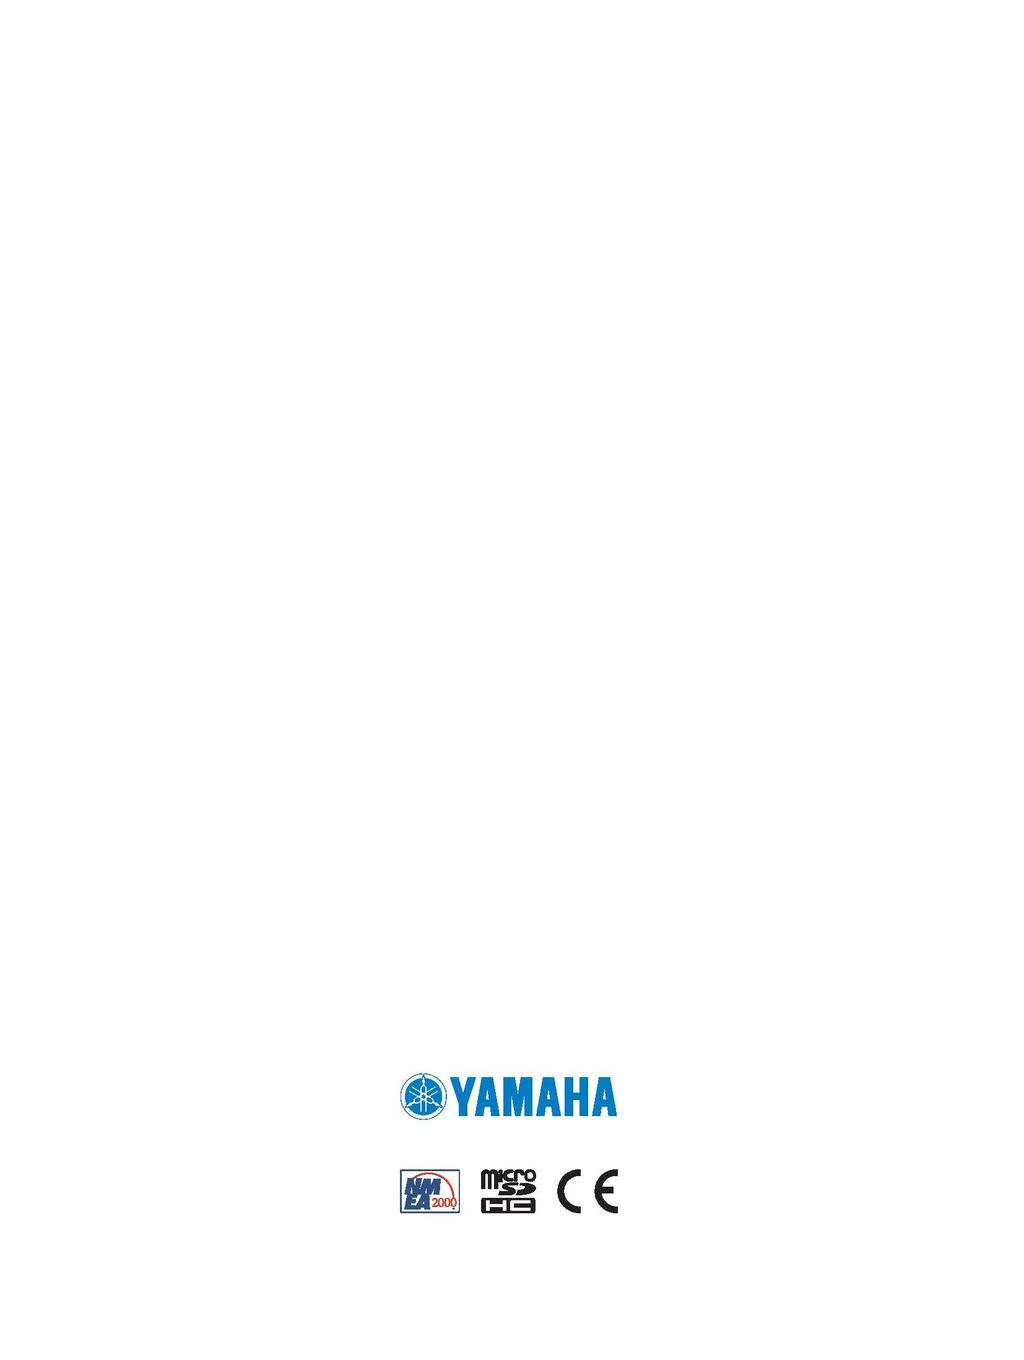 2017 YAMAHA Motor Co., LTD o sus subsidiarias Yamaha, el logotipo de Yamaha, Command Link Plus y Helm Master son marcas comerciales de YAMAHA Motor Co., LTD. Garmin, el logotipo de Garmin y BlueChart son marcas comerciales de Garmin Ltd.